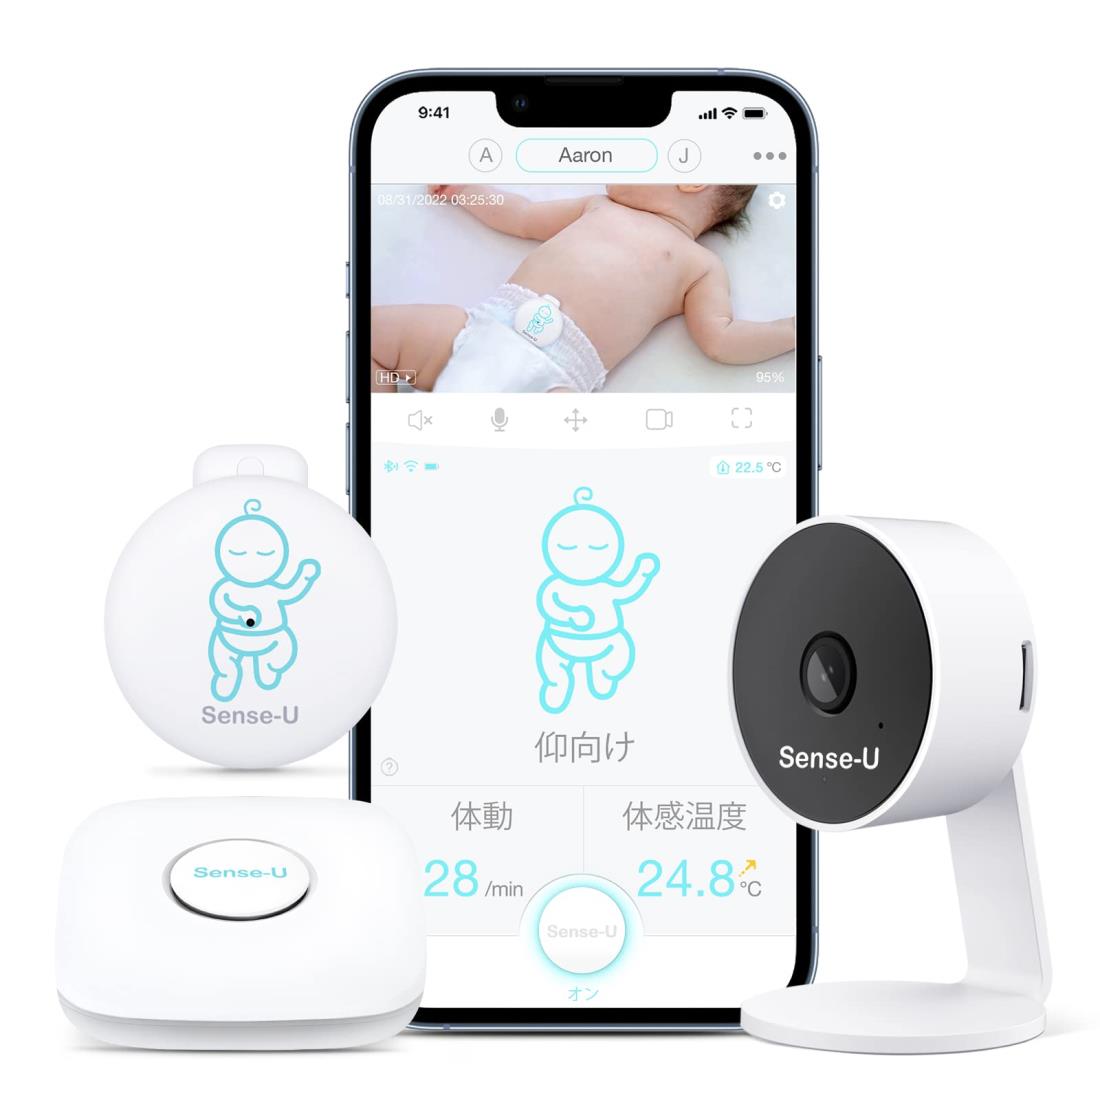 Sense-U ベビーモニターセット キッズデザイン賞 見守りカメラ + ベビーセンサー 1080P HD 双方向音声通信 ナイトビジョン どこにいても赤ちゃんの体動、睡眠の姿勢、周囲温度をモニタリング 乳幼児 新生児 出産 祝いプレゼント